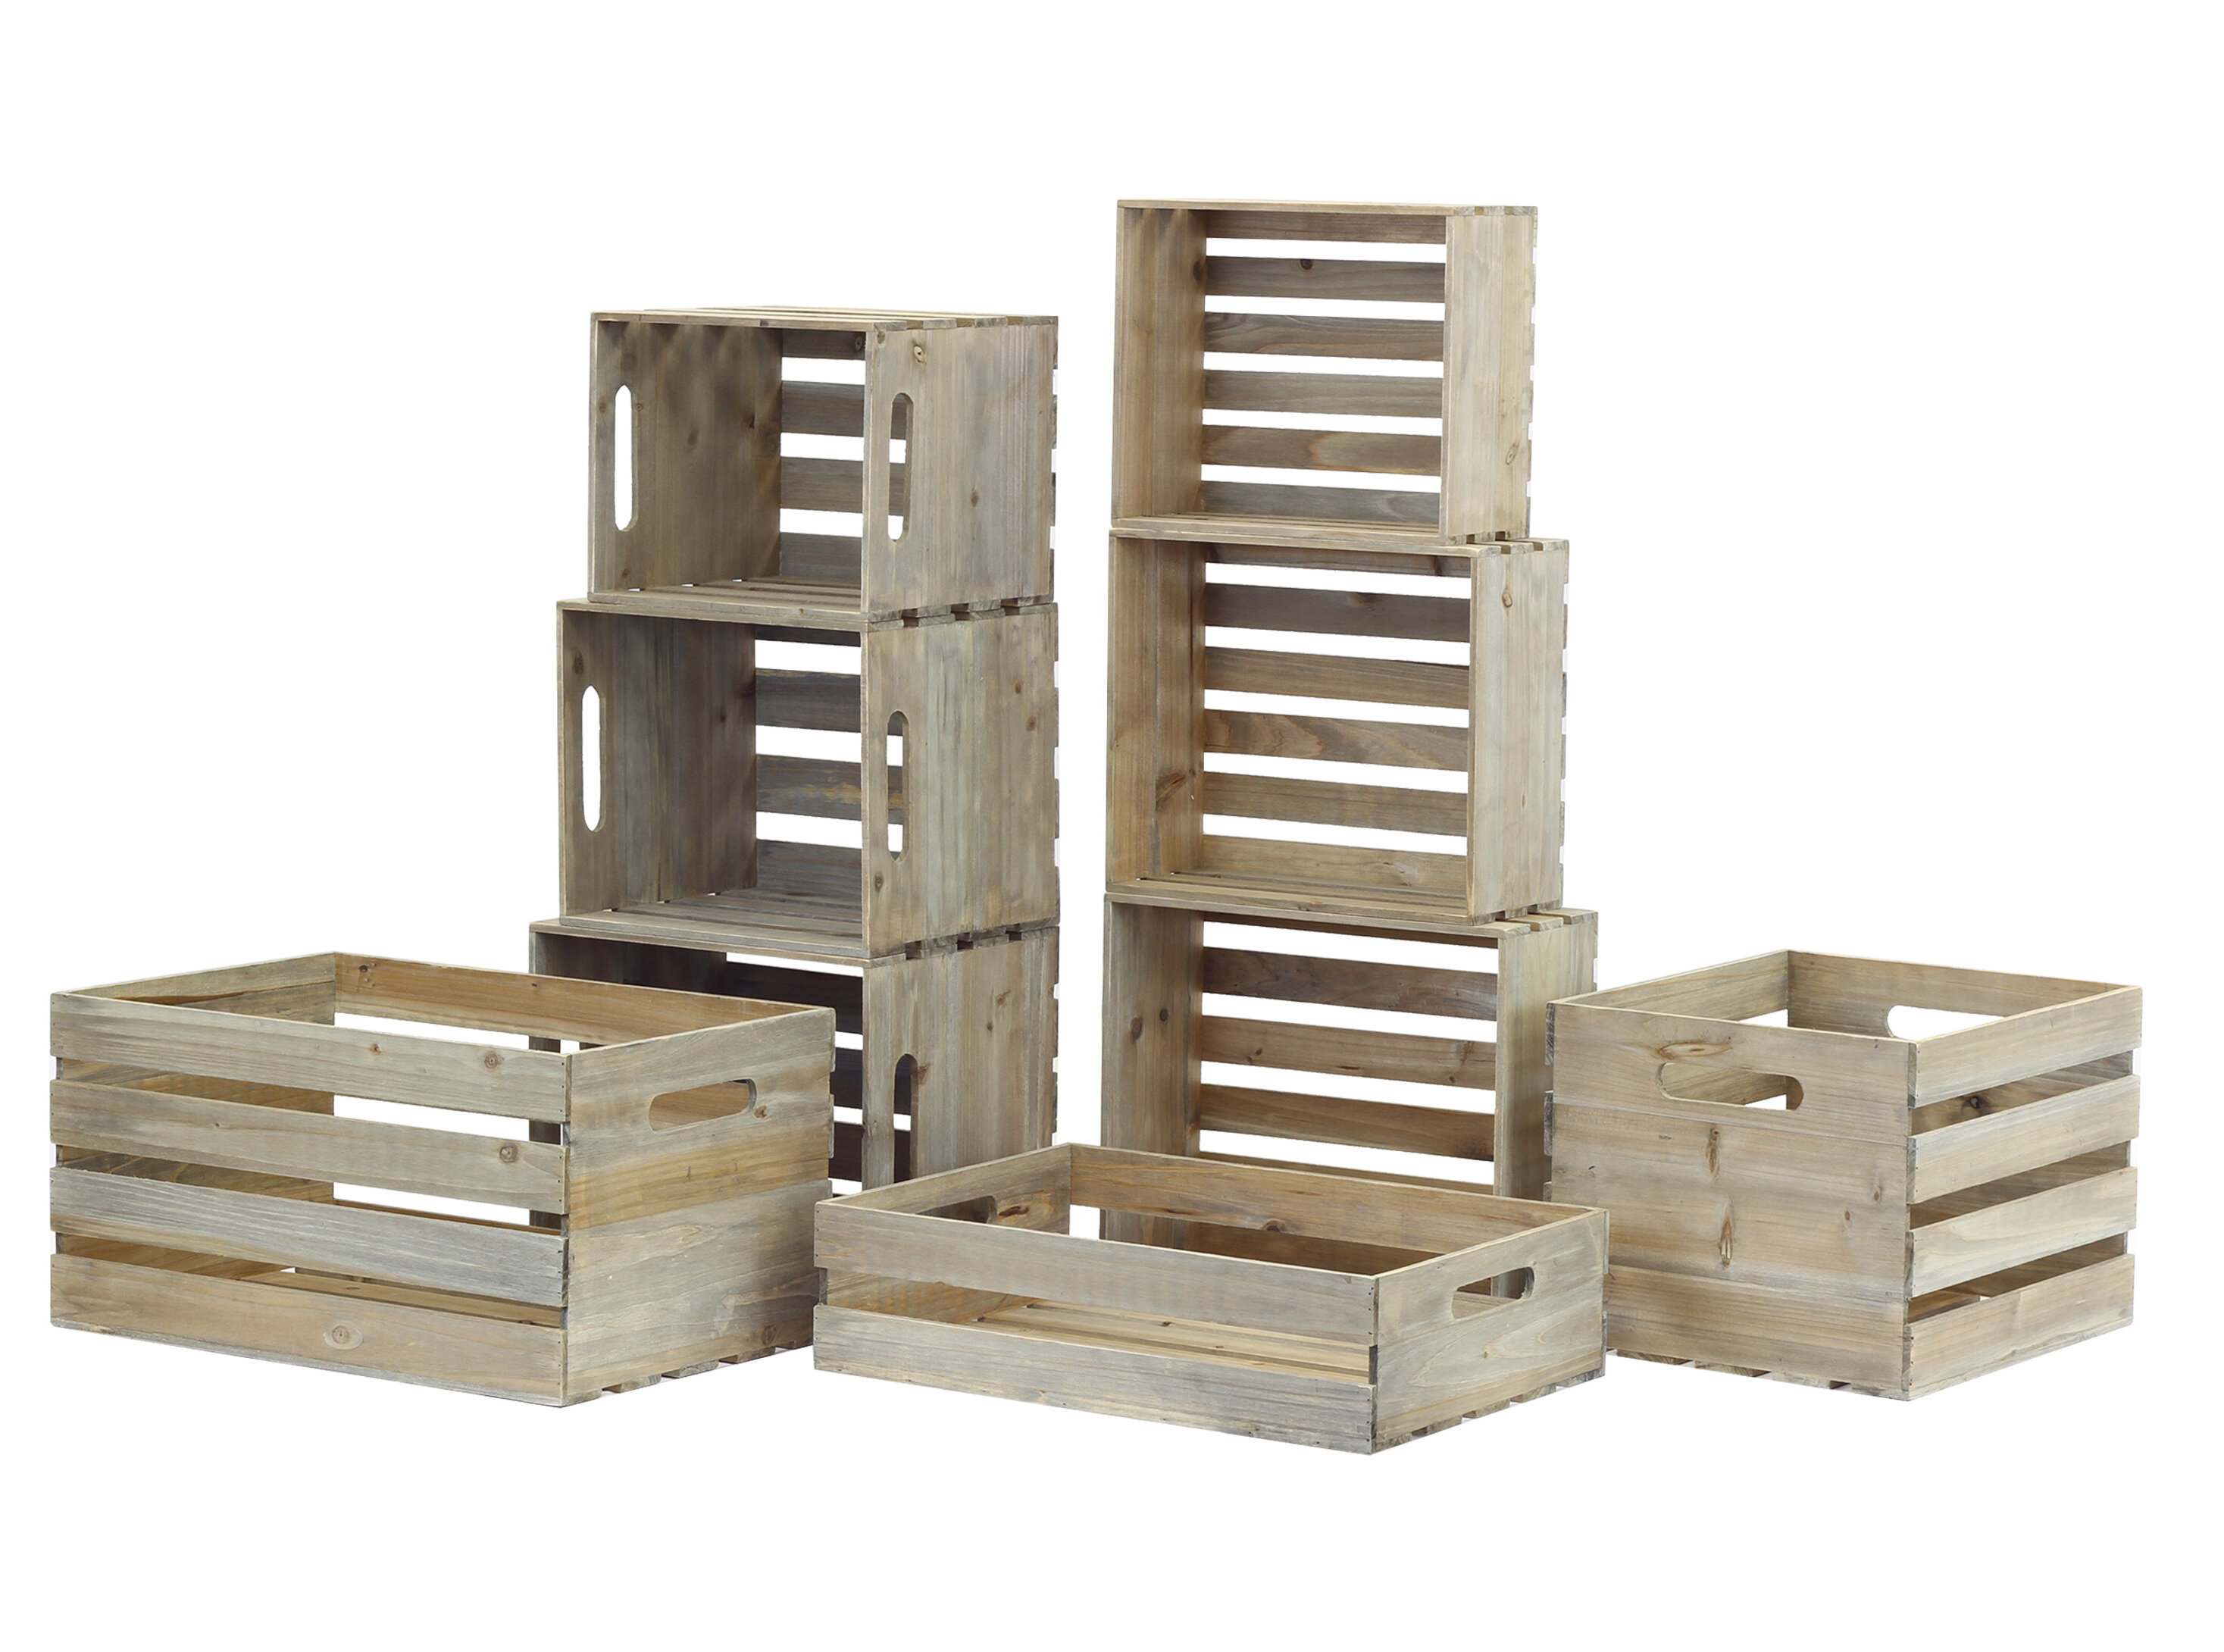 3 Log Basket  Wooden Apple Crates ideal storage boxes/display 